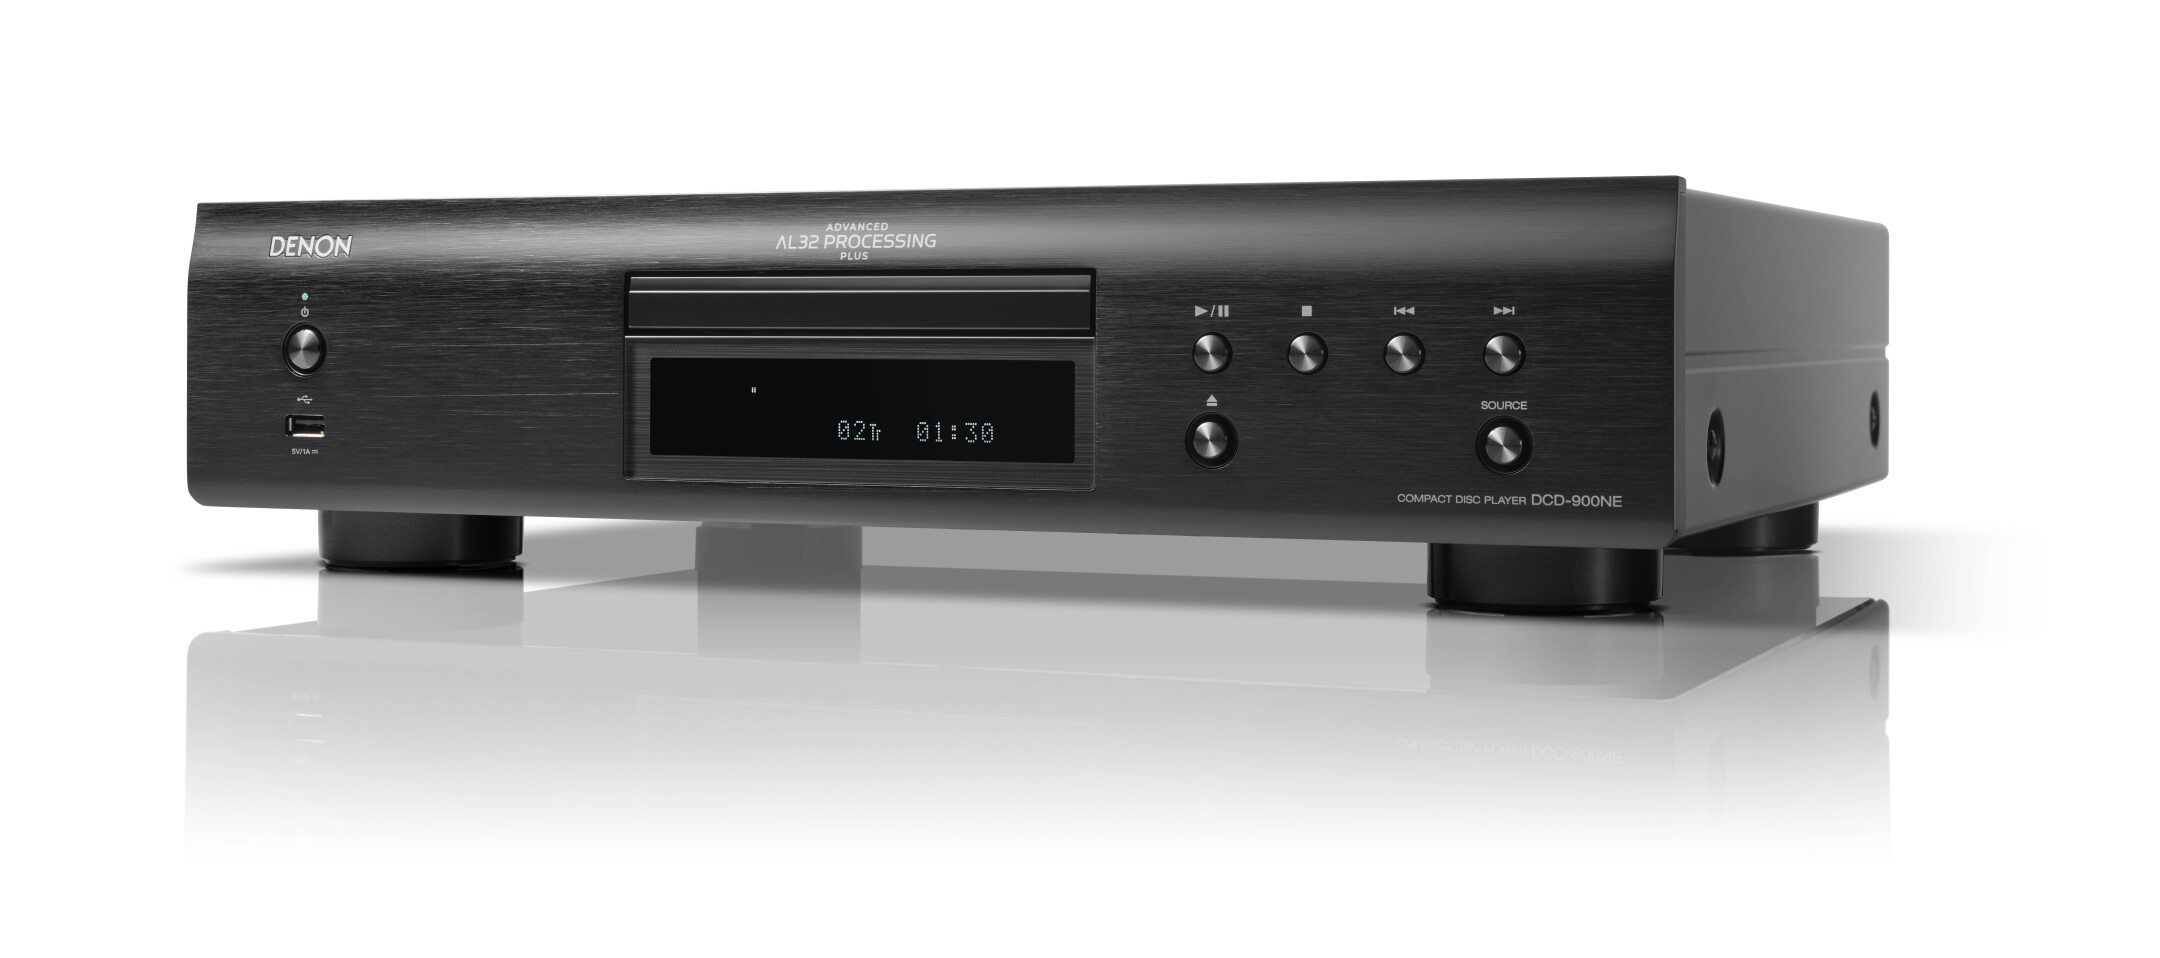 Denon-DCD-900NE-CD-Player-Front-USB-Hi-Res-Audio-Schwarz